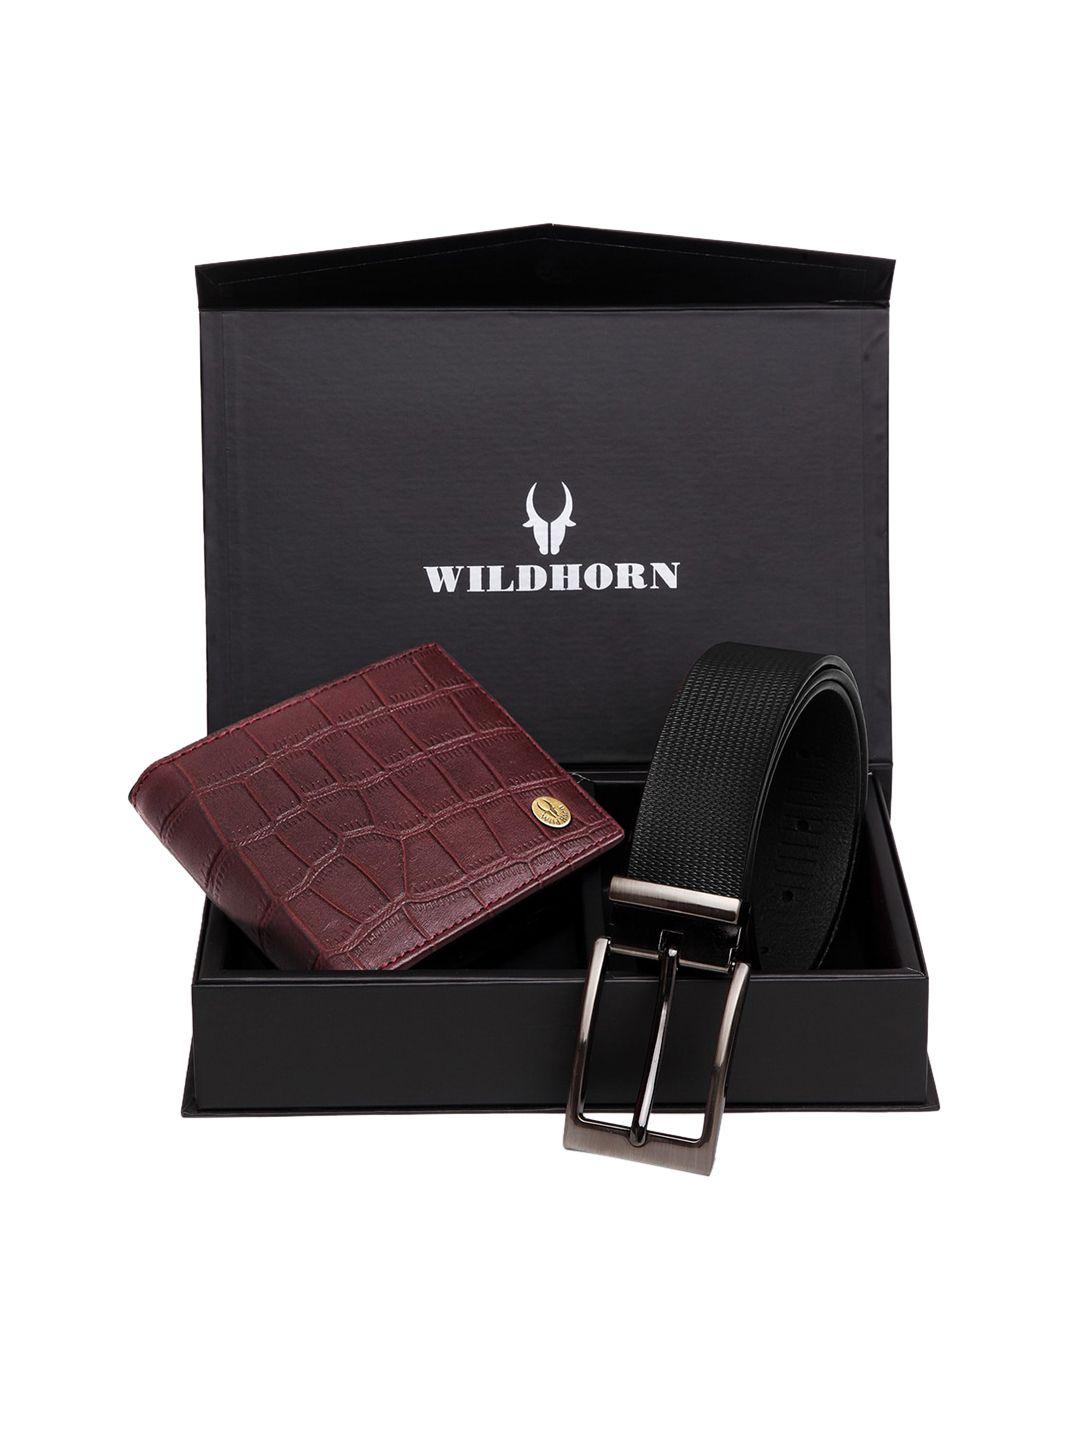 wildhorn men maroon & black rfid protected genuine leather accessory gift set